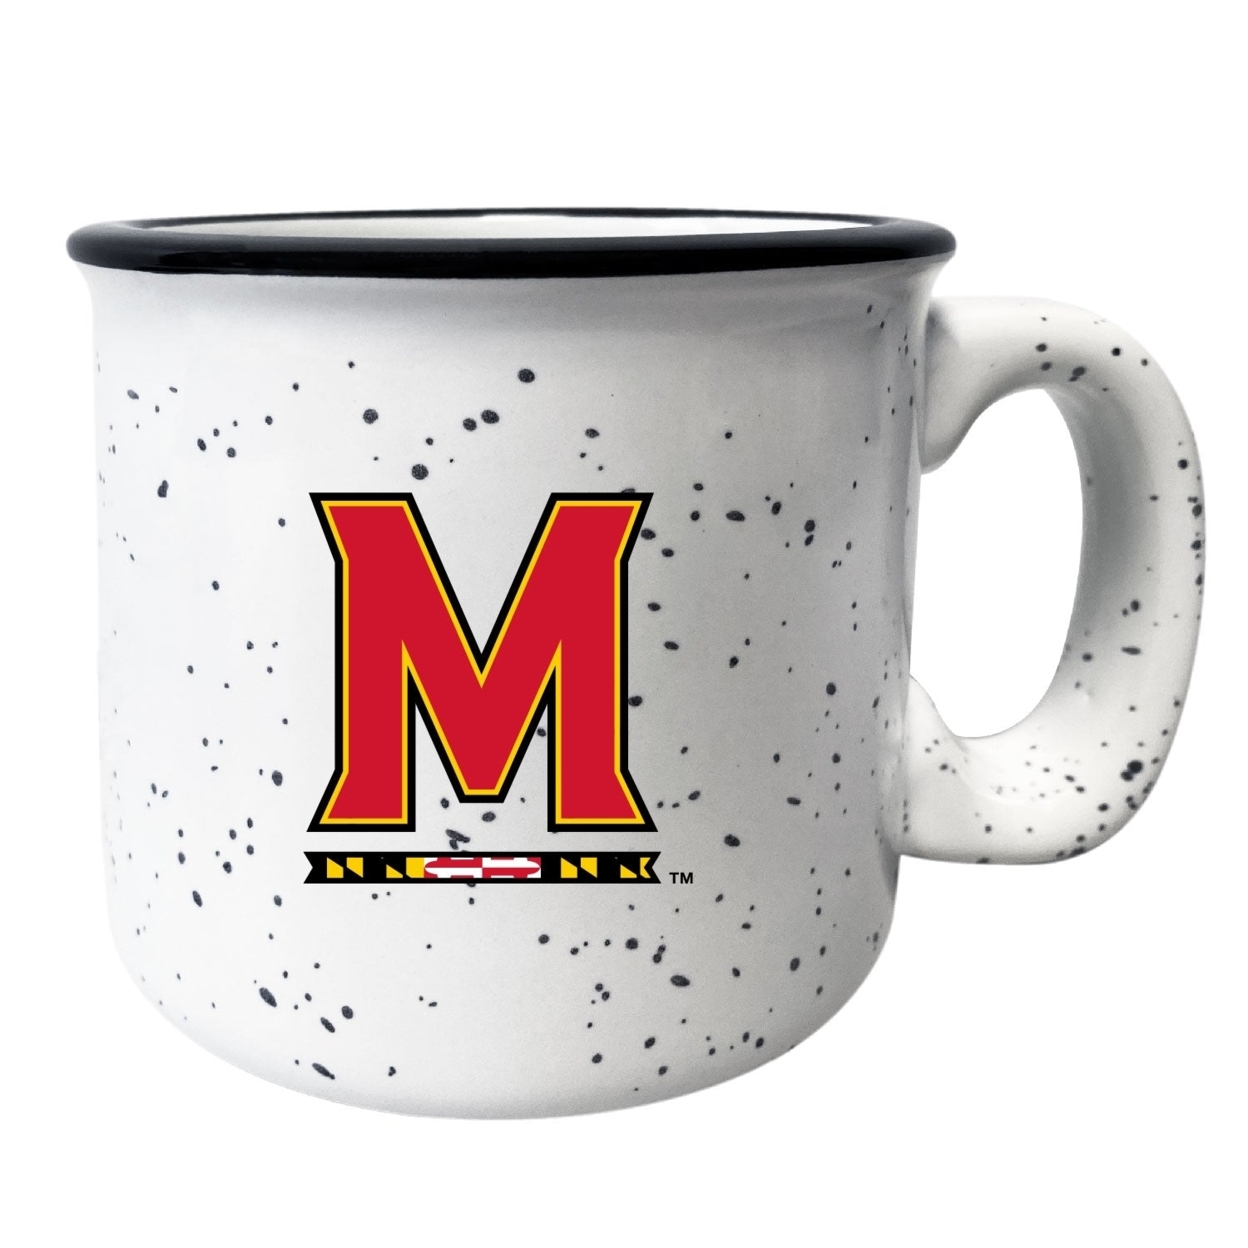 Maryland Terrapins Speckled Ceramic Camper Coffee Mug - Choose Your Color - White